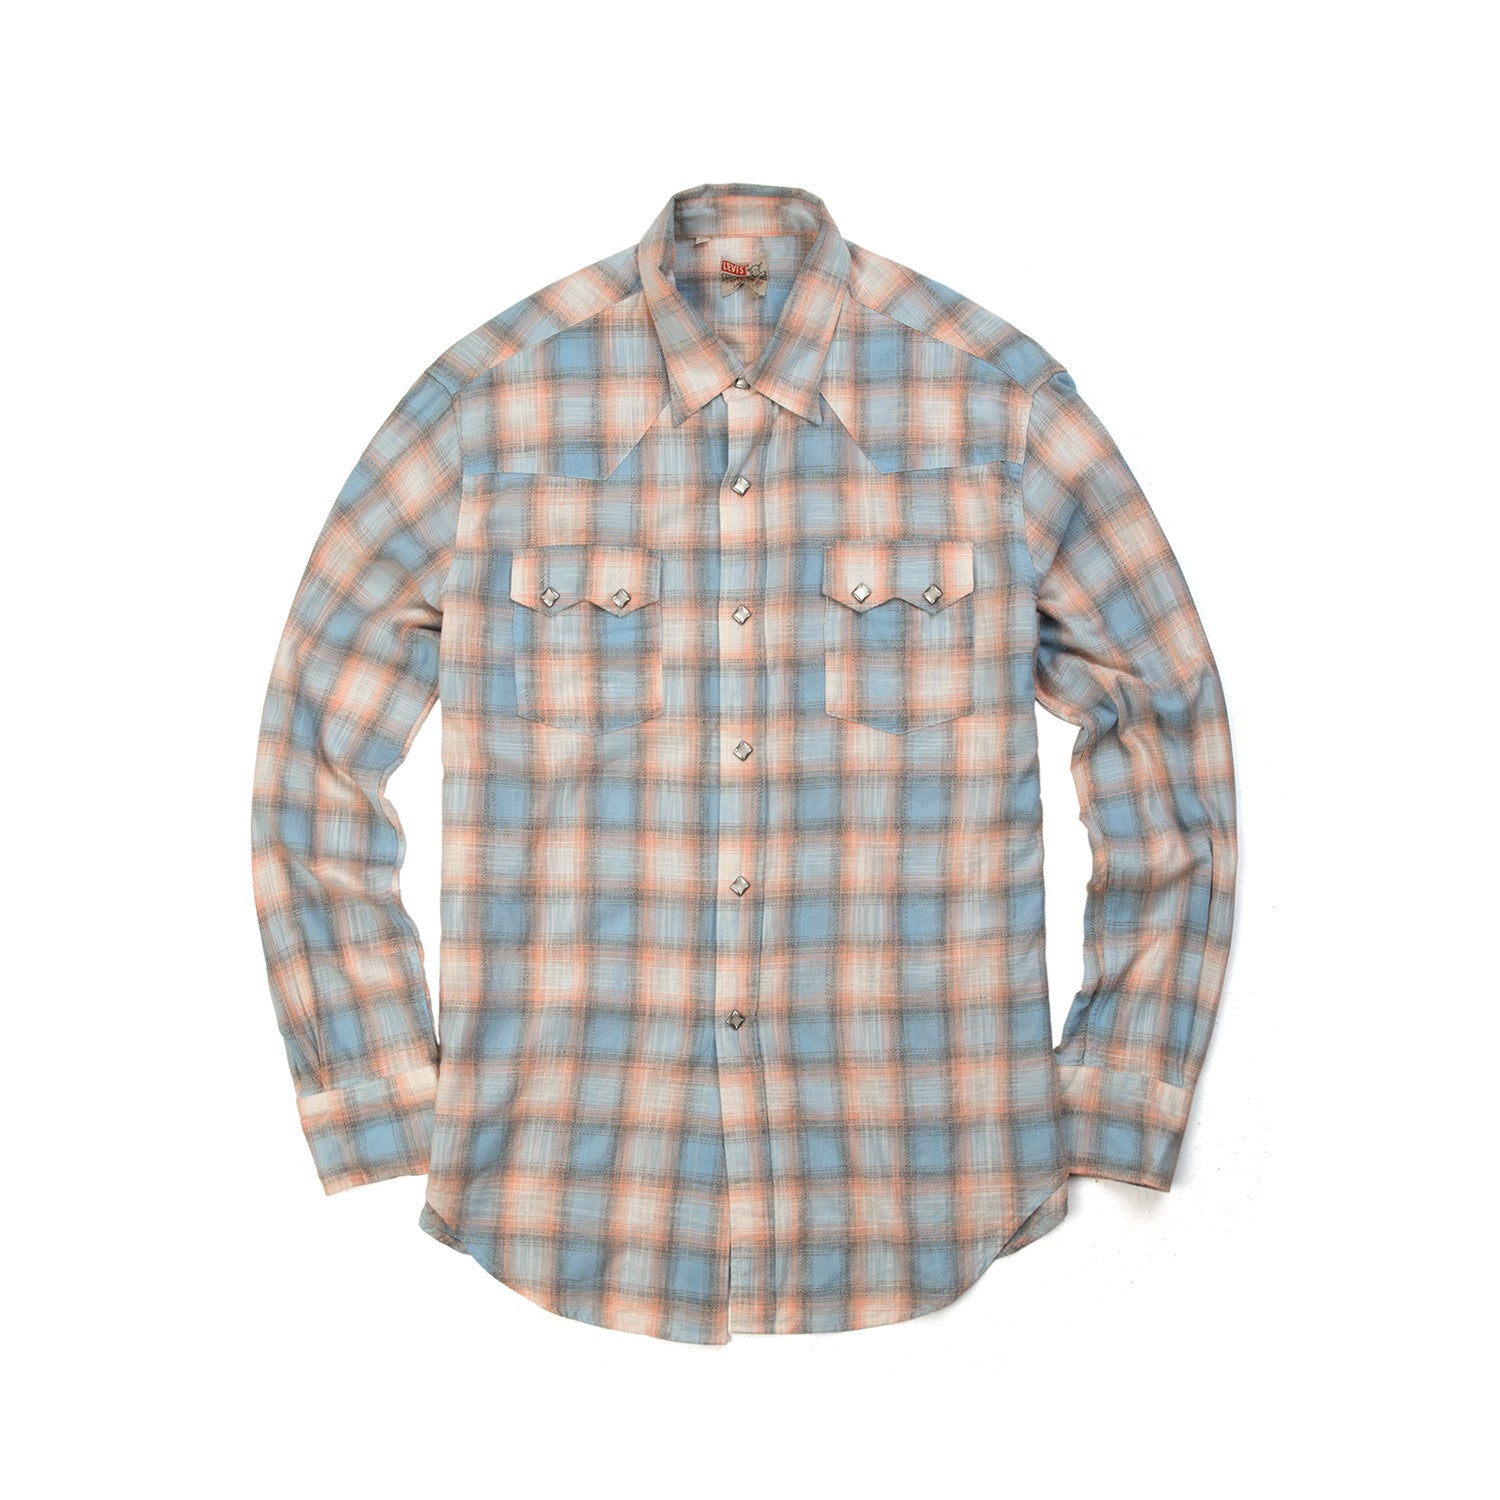 Levi's Vintage Clothing 1950's Western Wear Check Shirt | Concrete